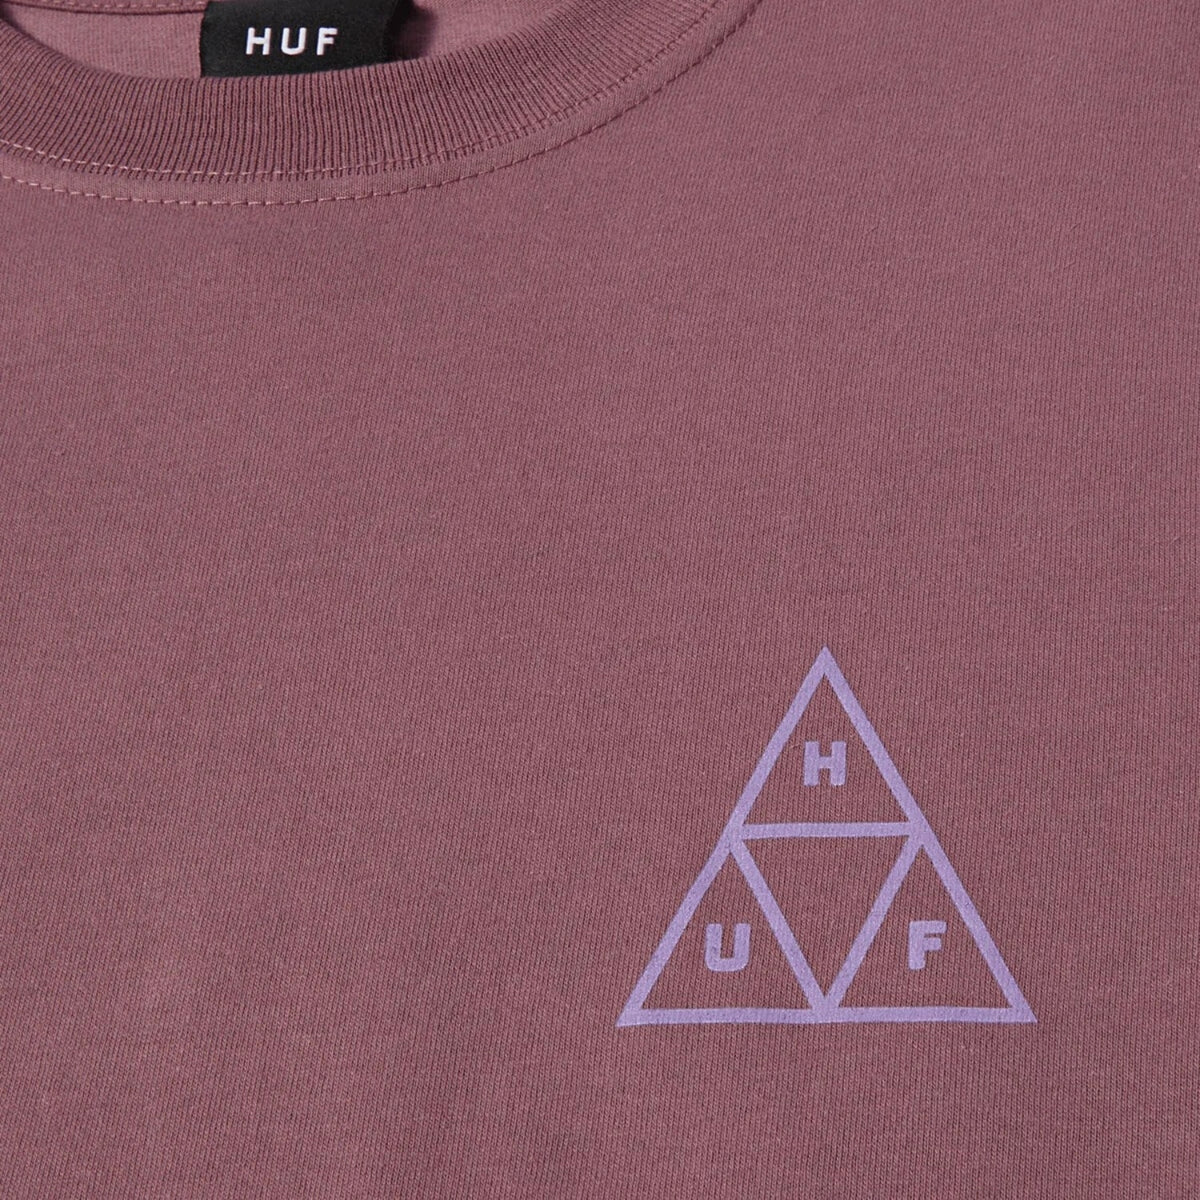 Huf Set TT Triple Triangle Longsleeve T-Shirt - Mauve - Mens Graphic T-Shirt by Huf